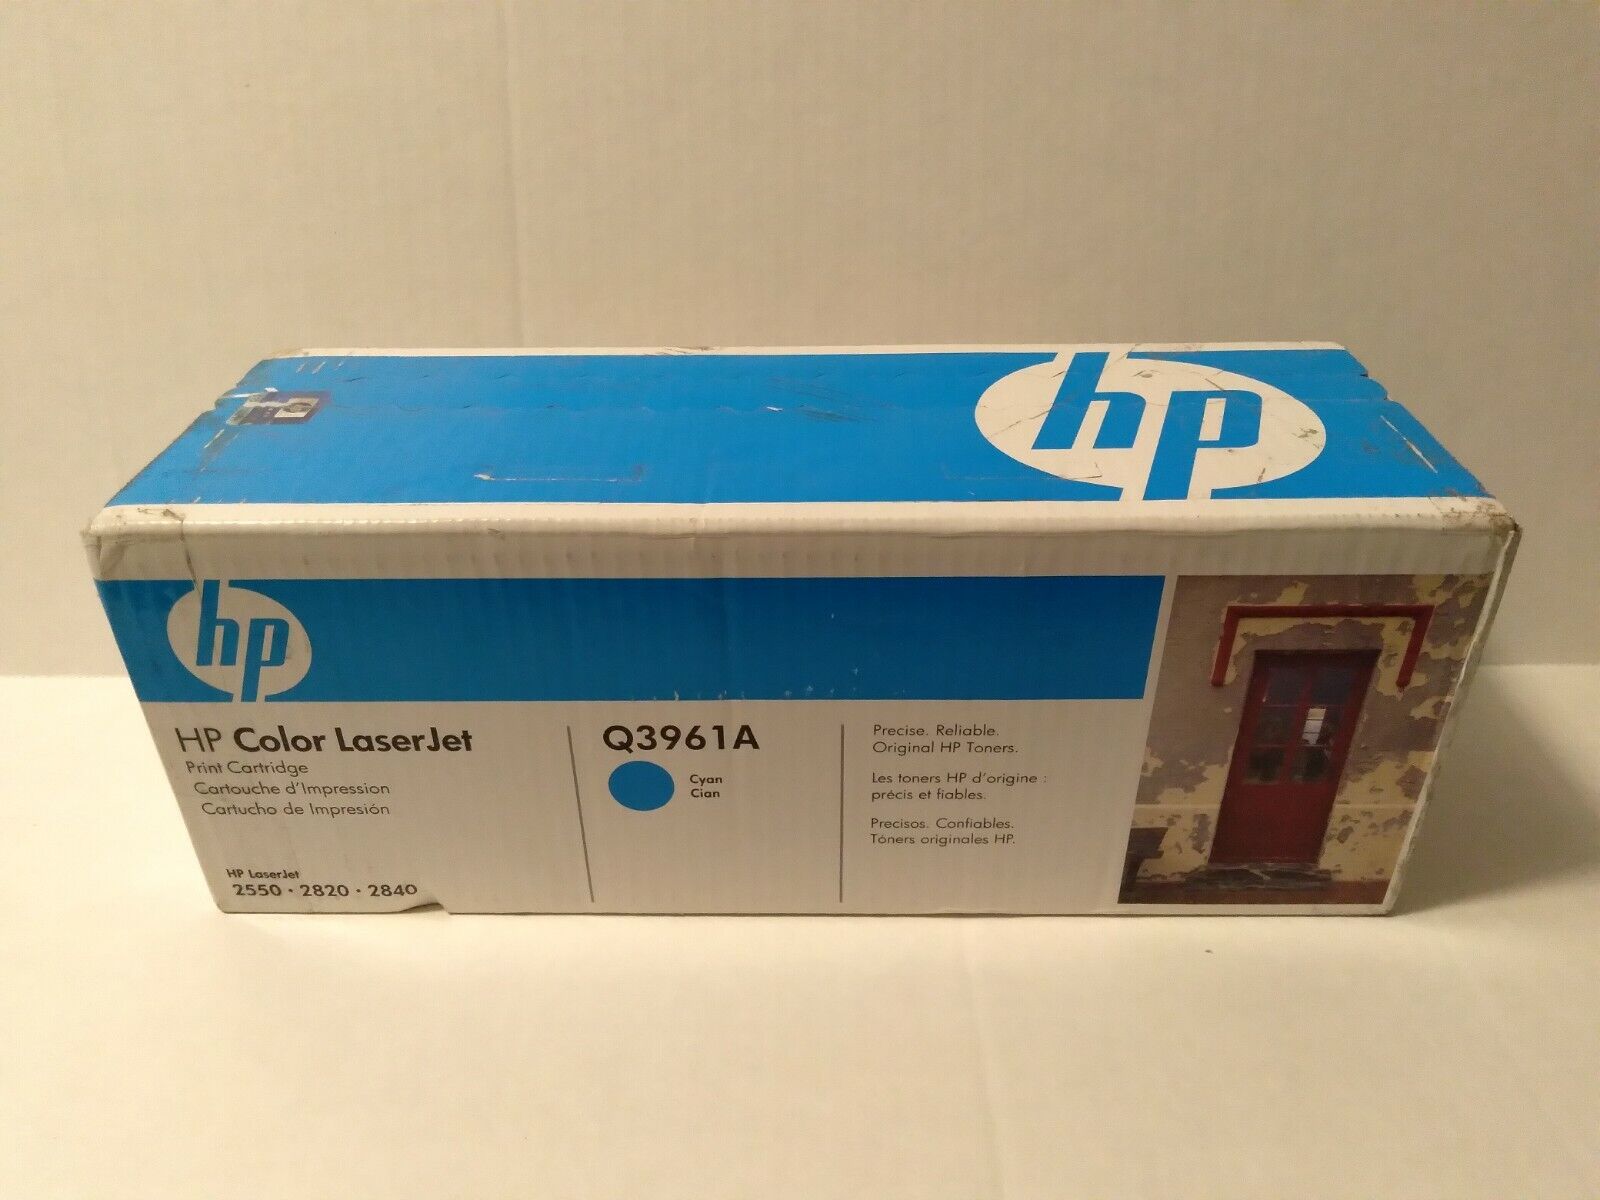 Genuine HP Color LaserJet Toner Q3961A Cyan For HP LaserJet 2550, 2820, 2840 NIB